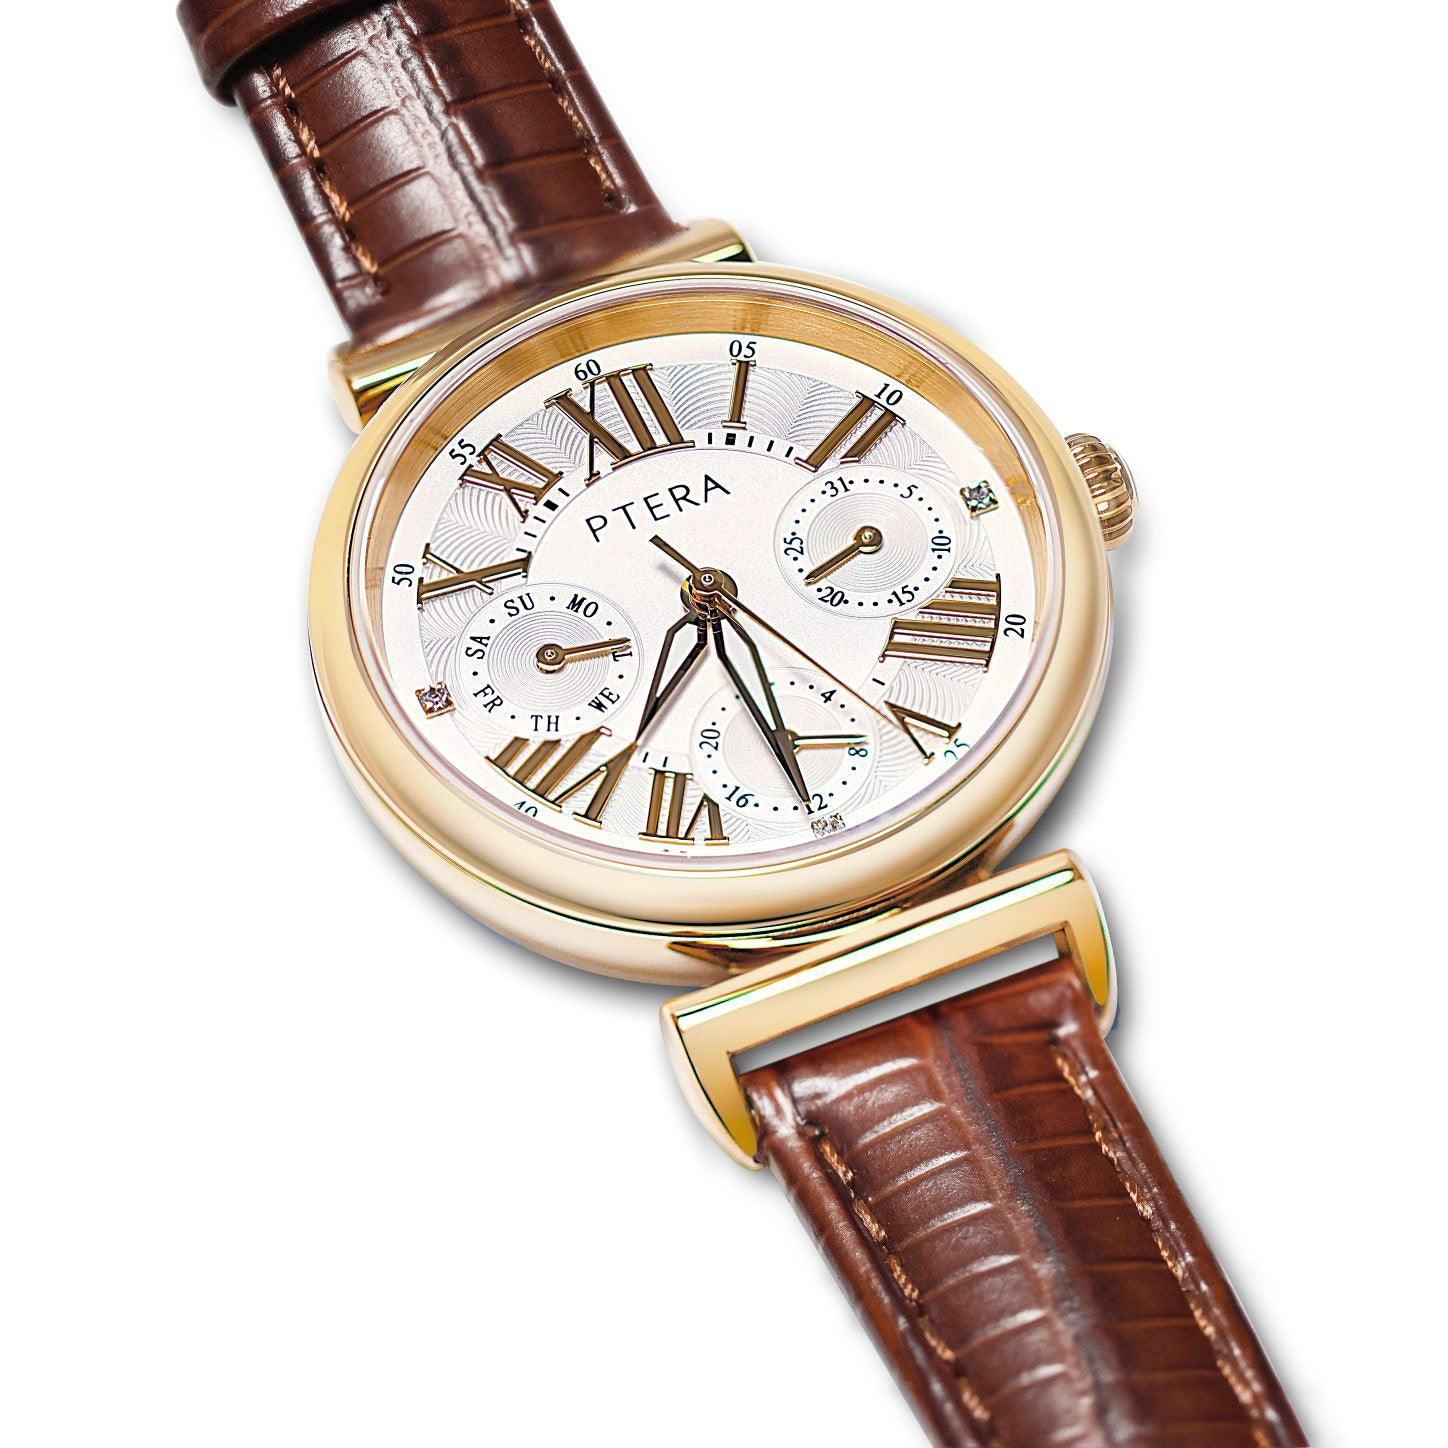 The Classic Watch - Ptera Jewelry